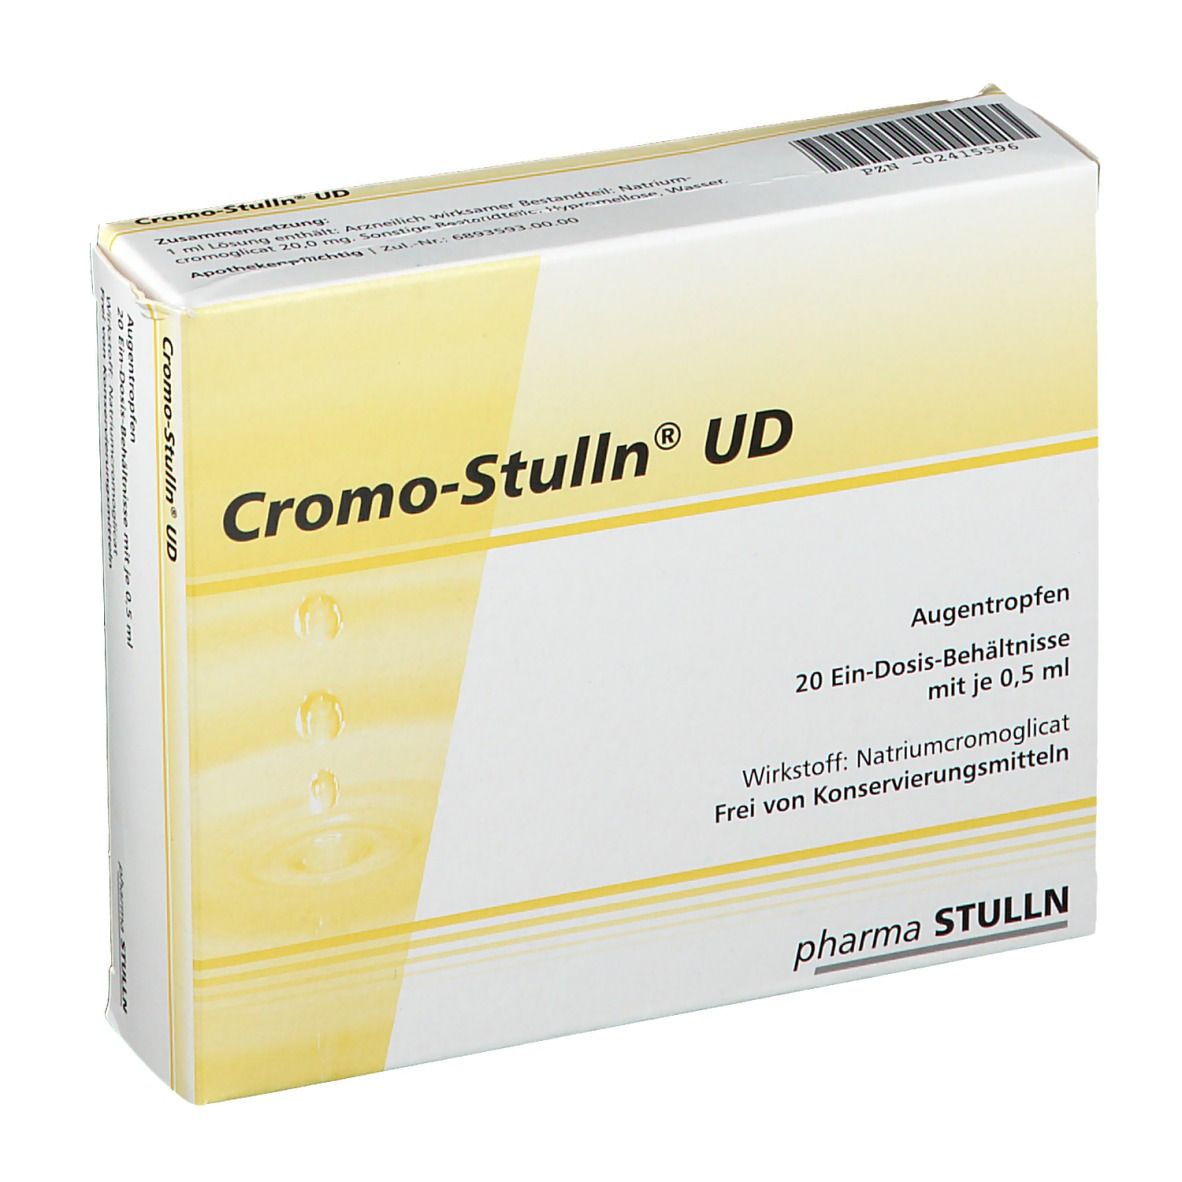 Cromo-Stulln® UD Augentropfen